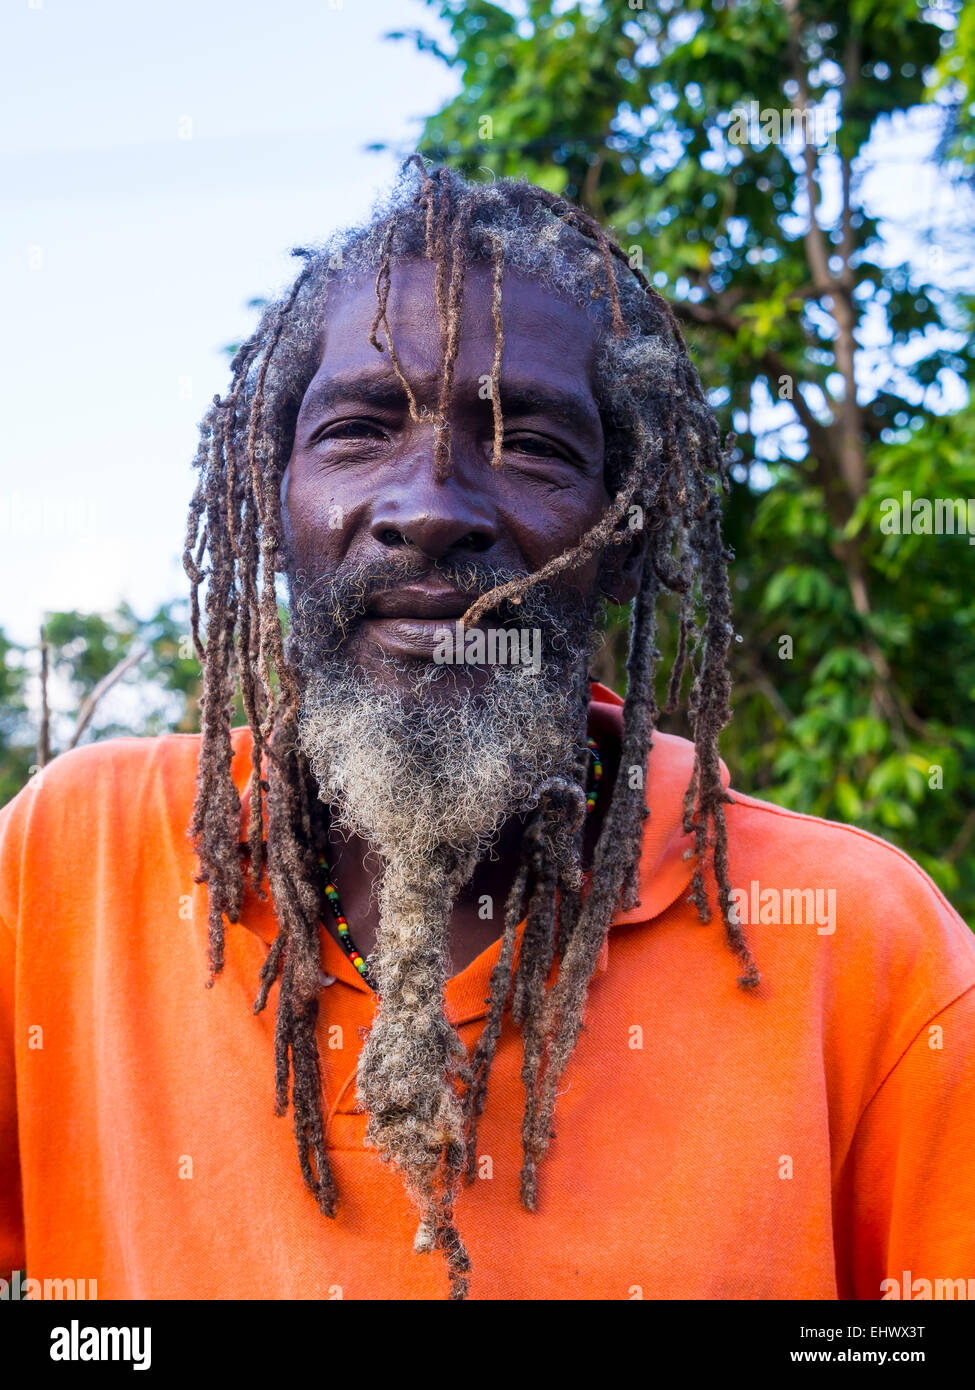 Caribbean, Jamaica, Portrait of a Jamaican with dreadlocks Stock Photo